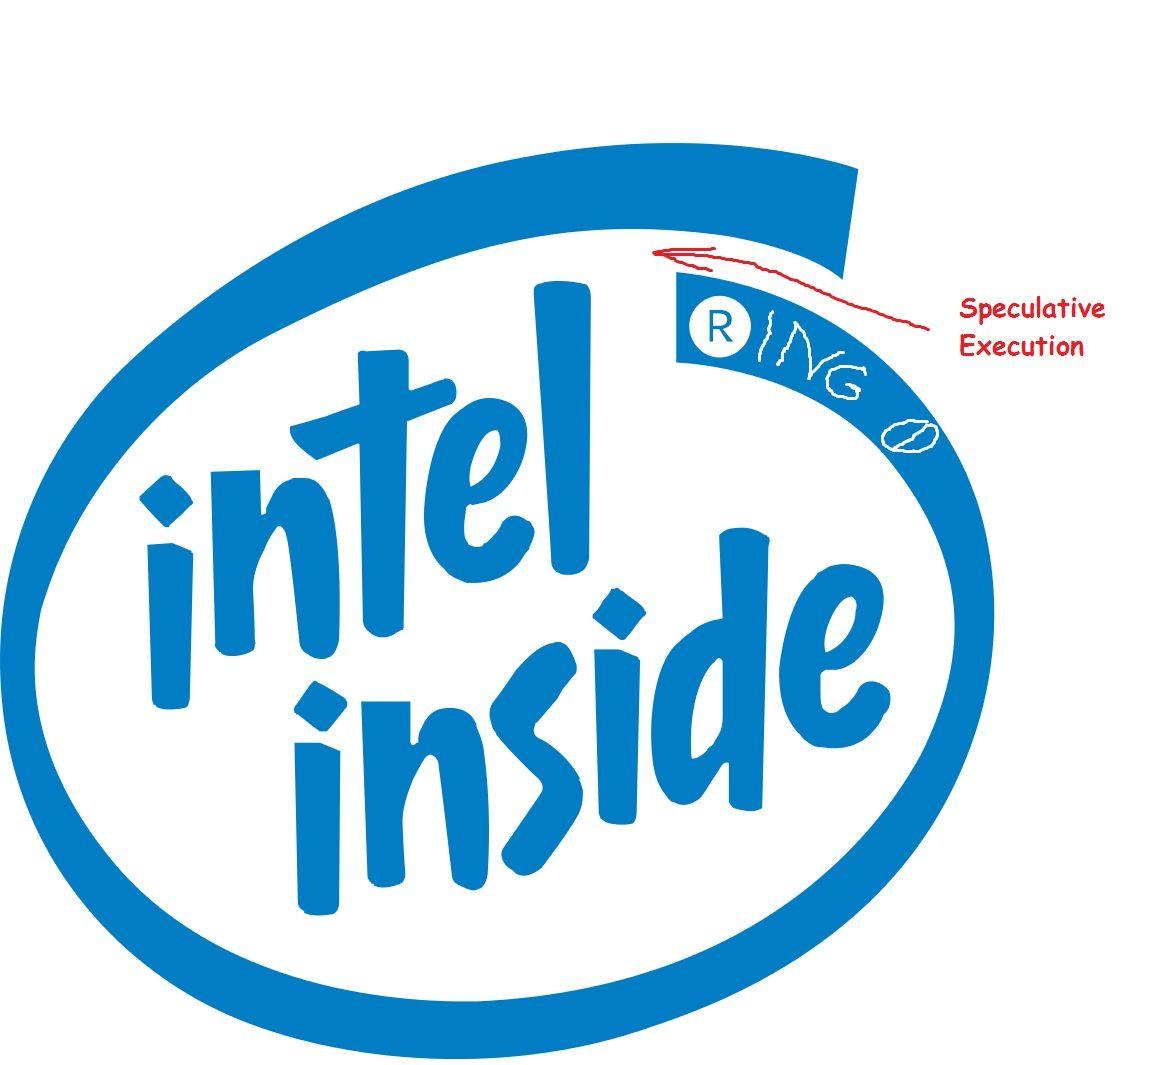 Nice Intel Logo - The old Intel logo makes sense now